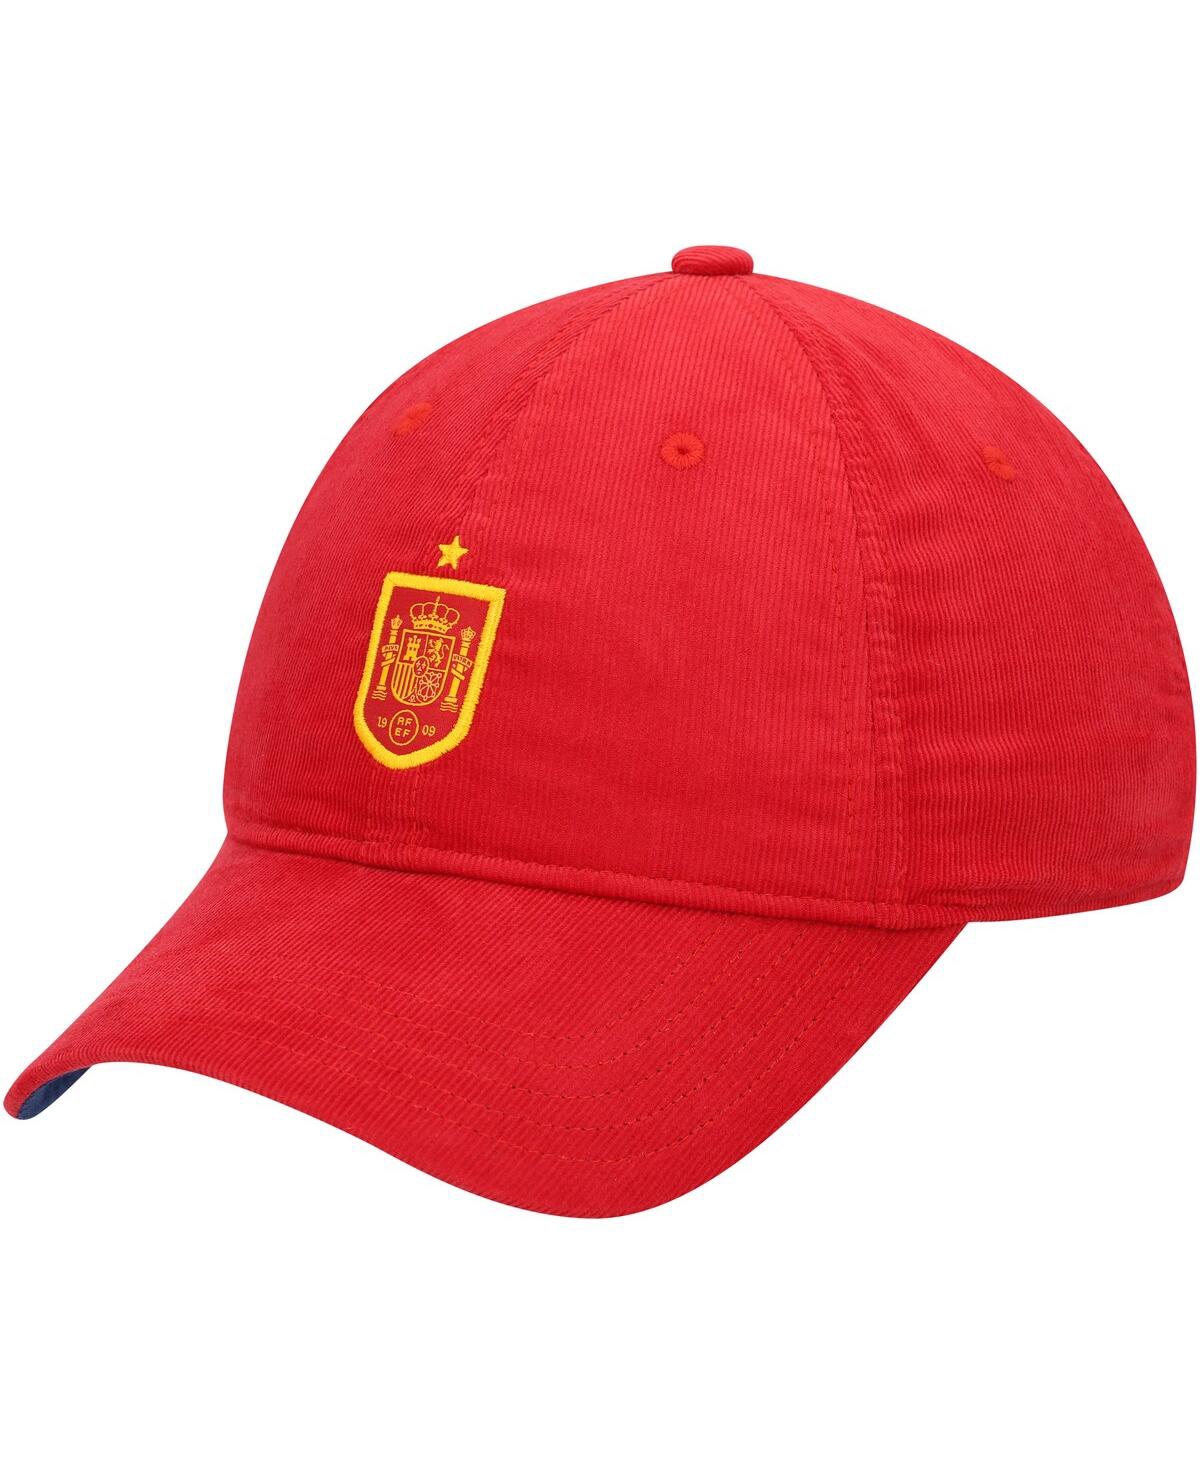 ADIDAS ORIGINALS MEN'S ADIDAS RED SPAIN NATIONAL TEAM WINTER ADJUSTABLE HAT